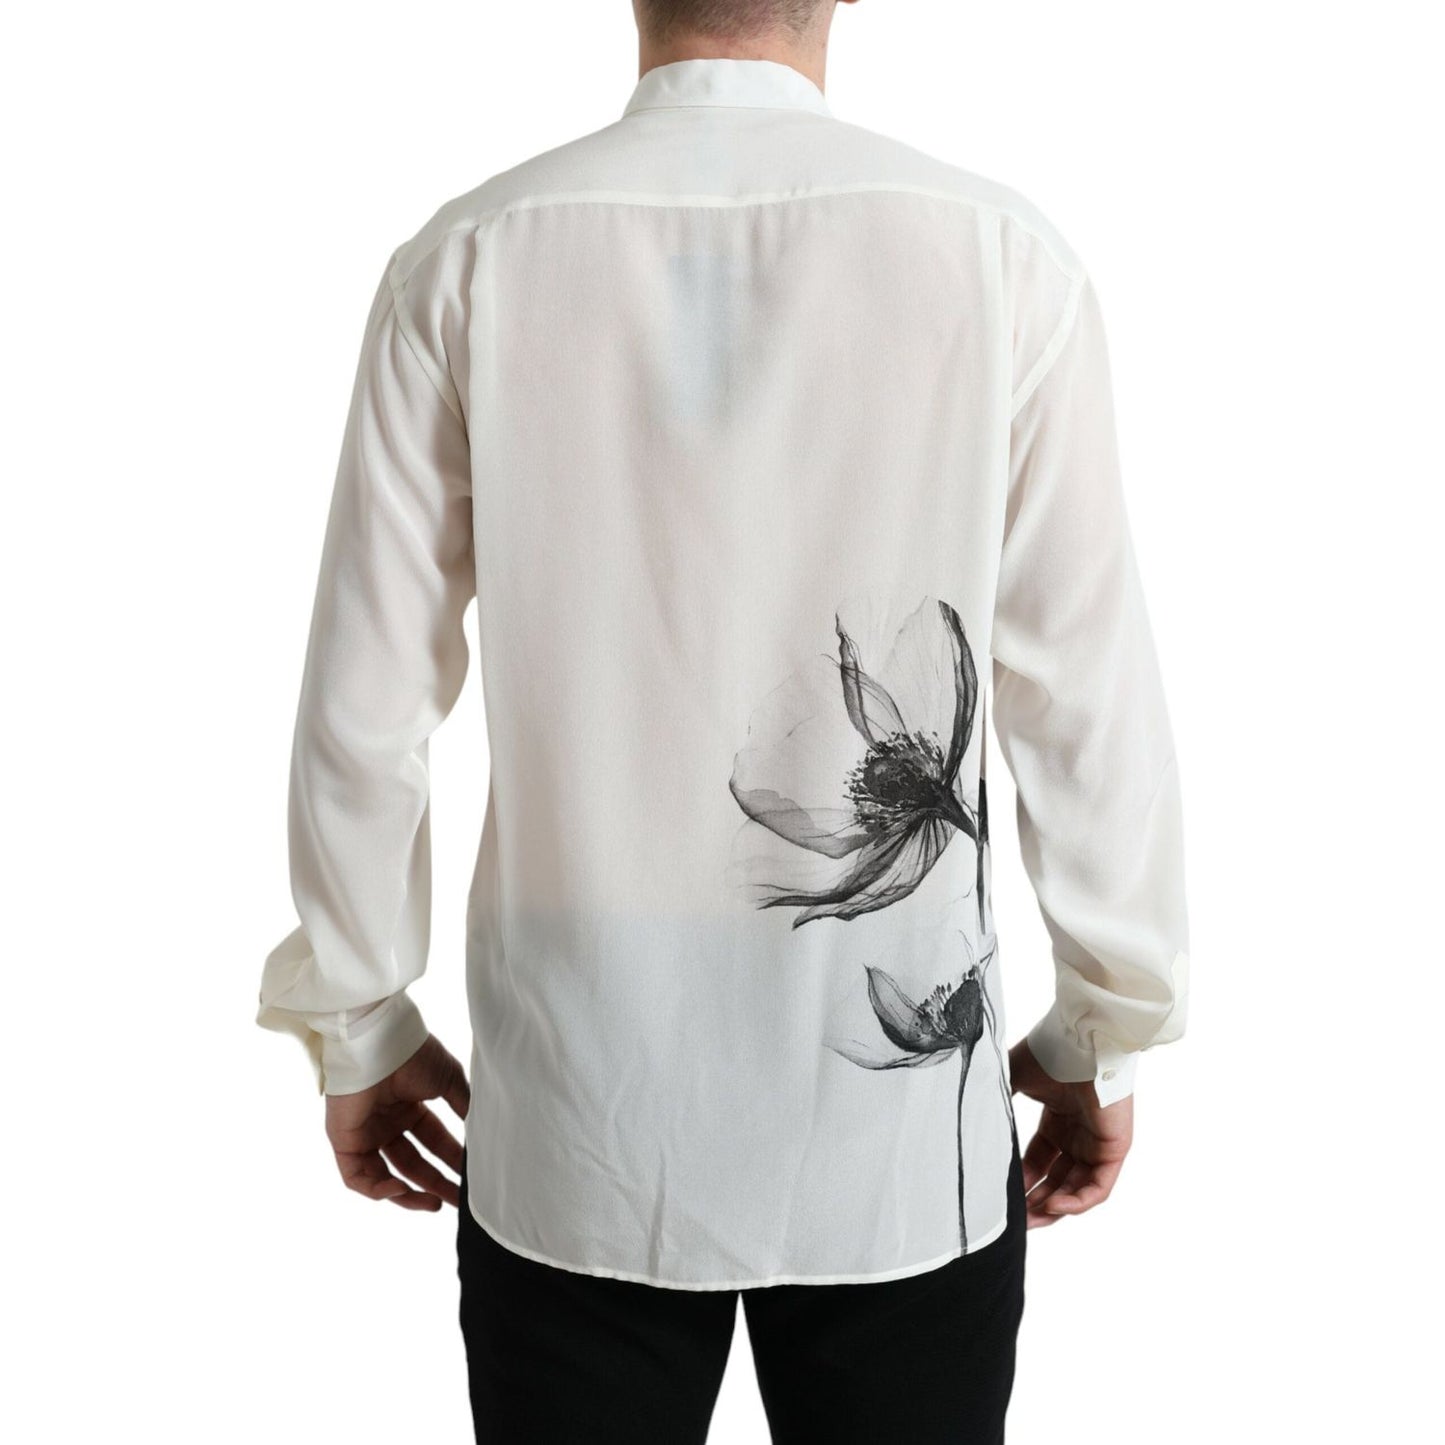 Dolce & Gabbana Elegant Floral Silk Dress Shirt white-floral-collared-dress-silk-shirt